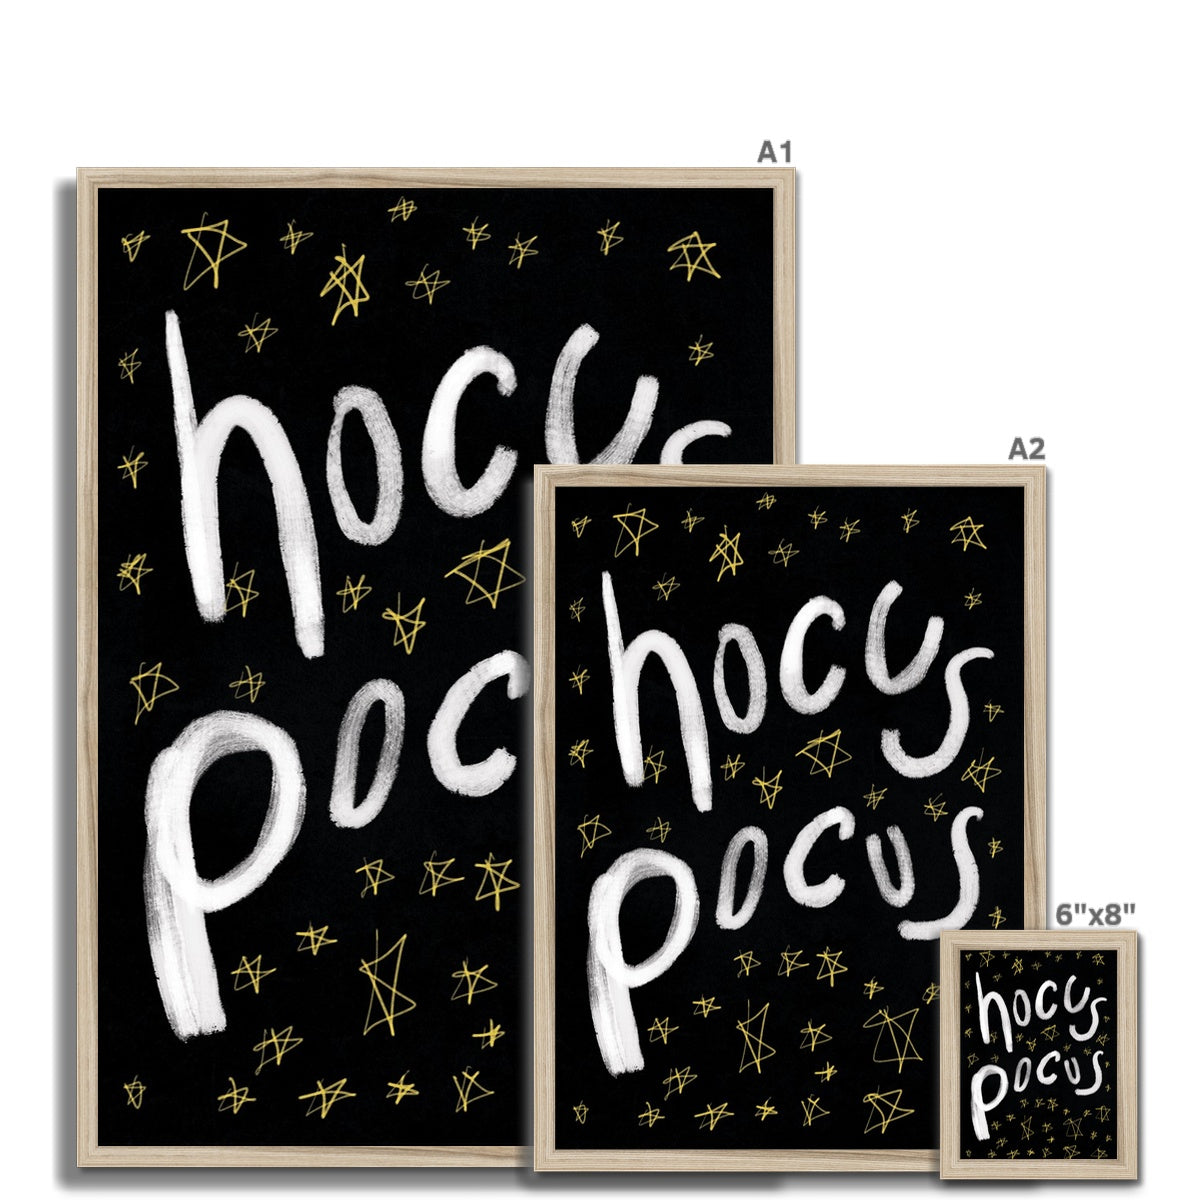 Hocus Pocus Print - Halloween Special Framed Print